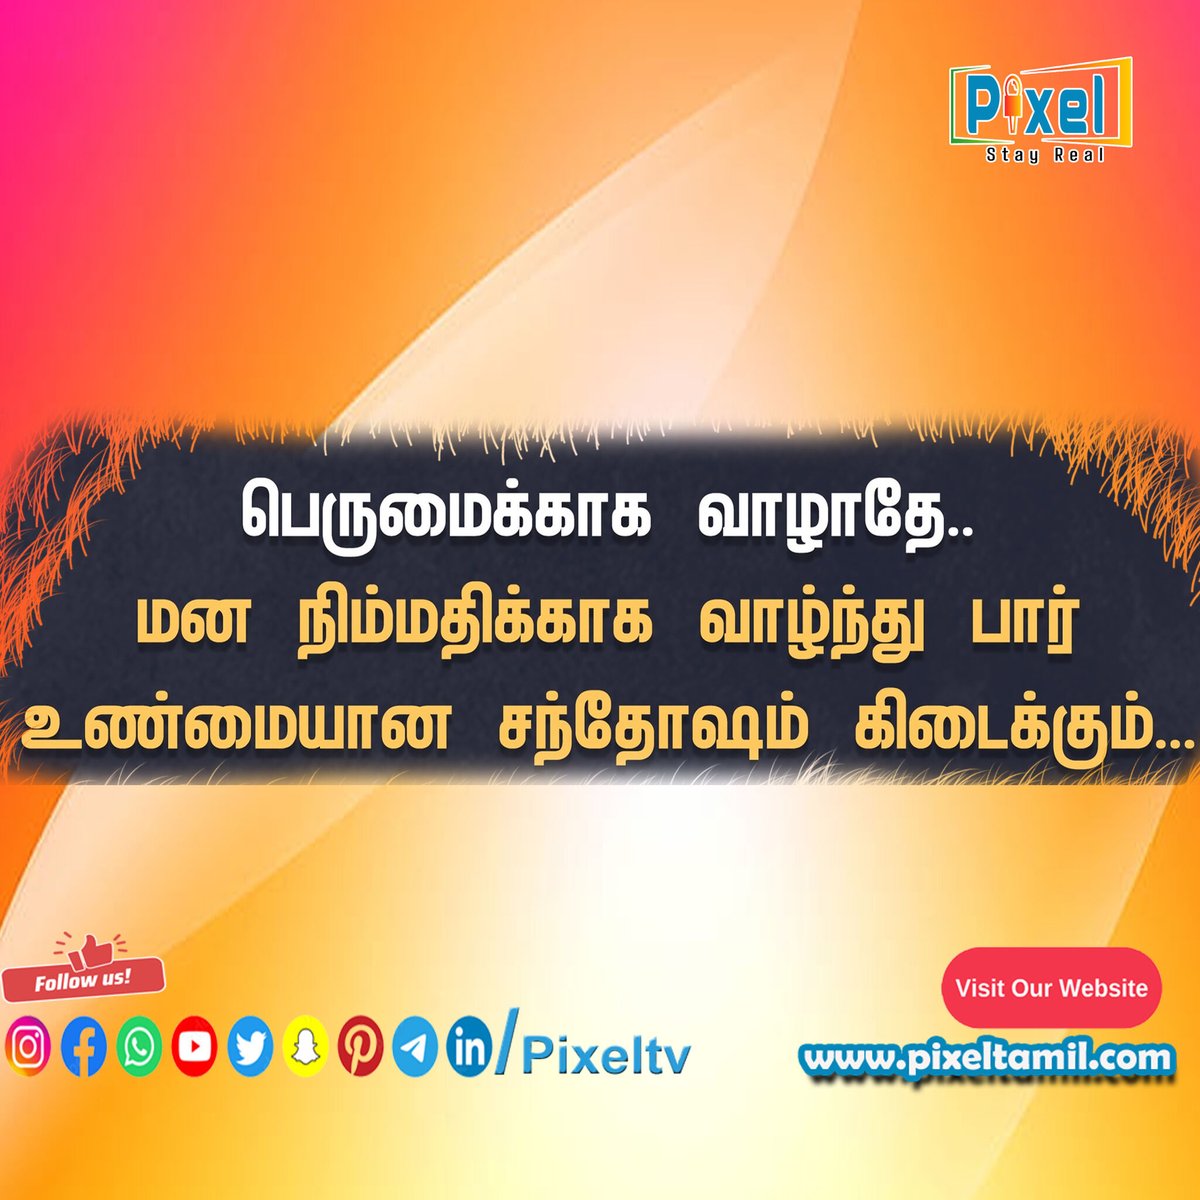 #Tamil #Motivation  #pixelmedia #pixeltv #TamilEntertainment #TamilNews #EntertainmentHub #DailyExcitement #CulturalVibes #FollowUs